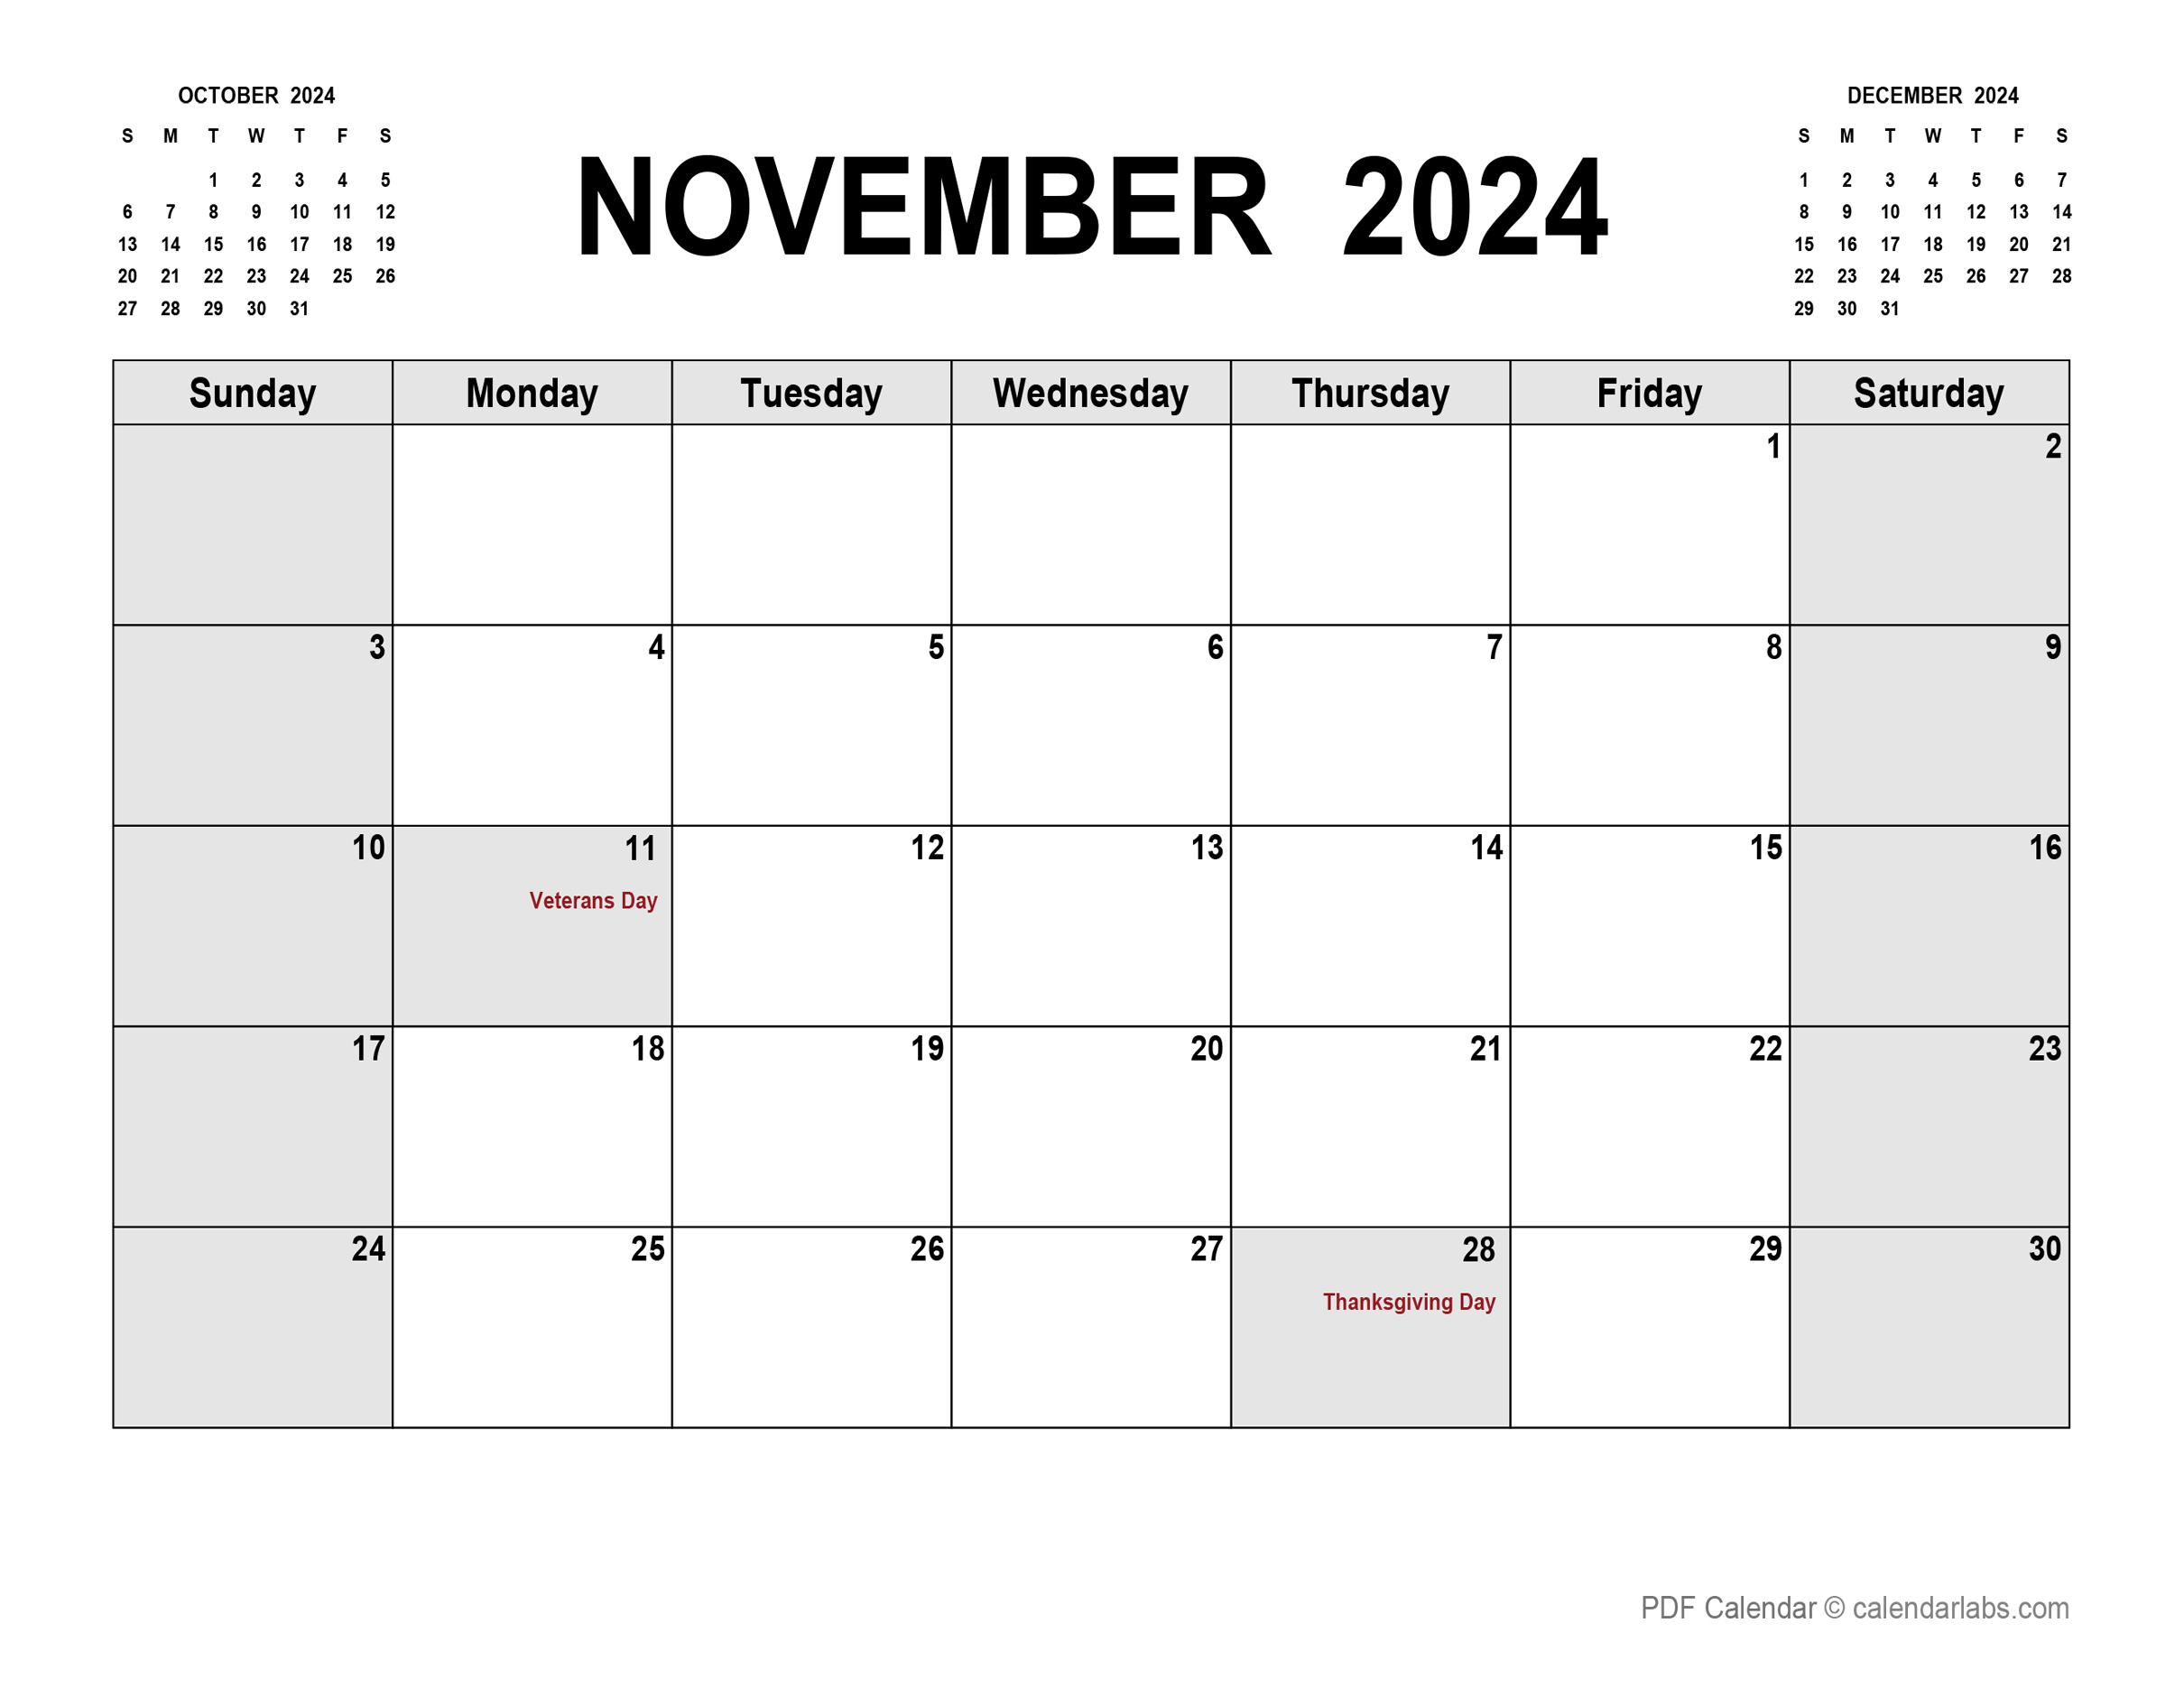 november-2024-calendar-with-united-states-holidays